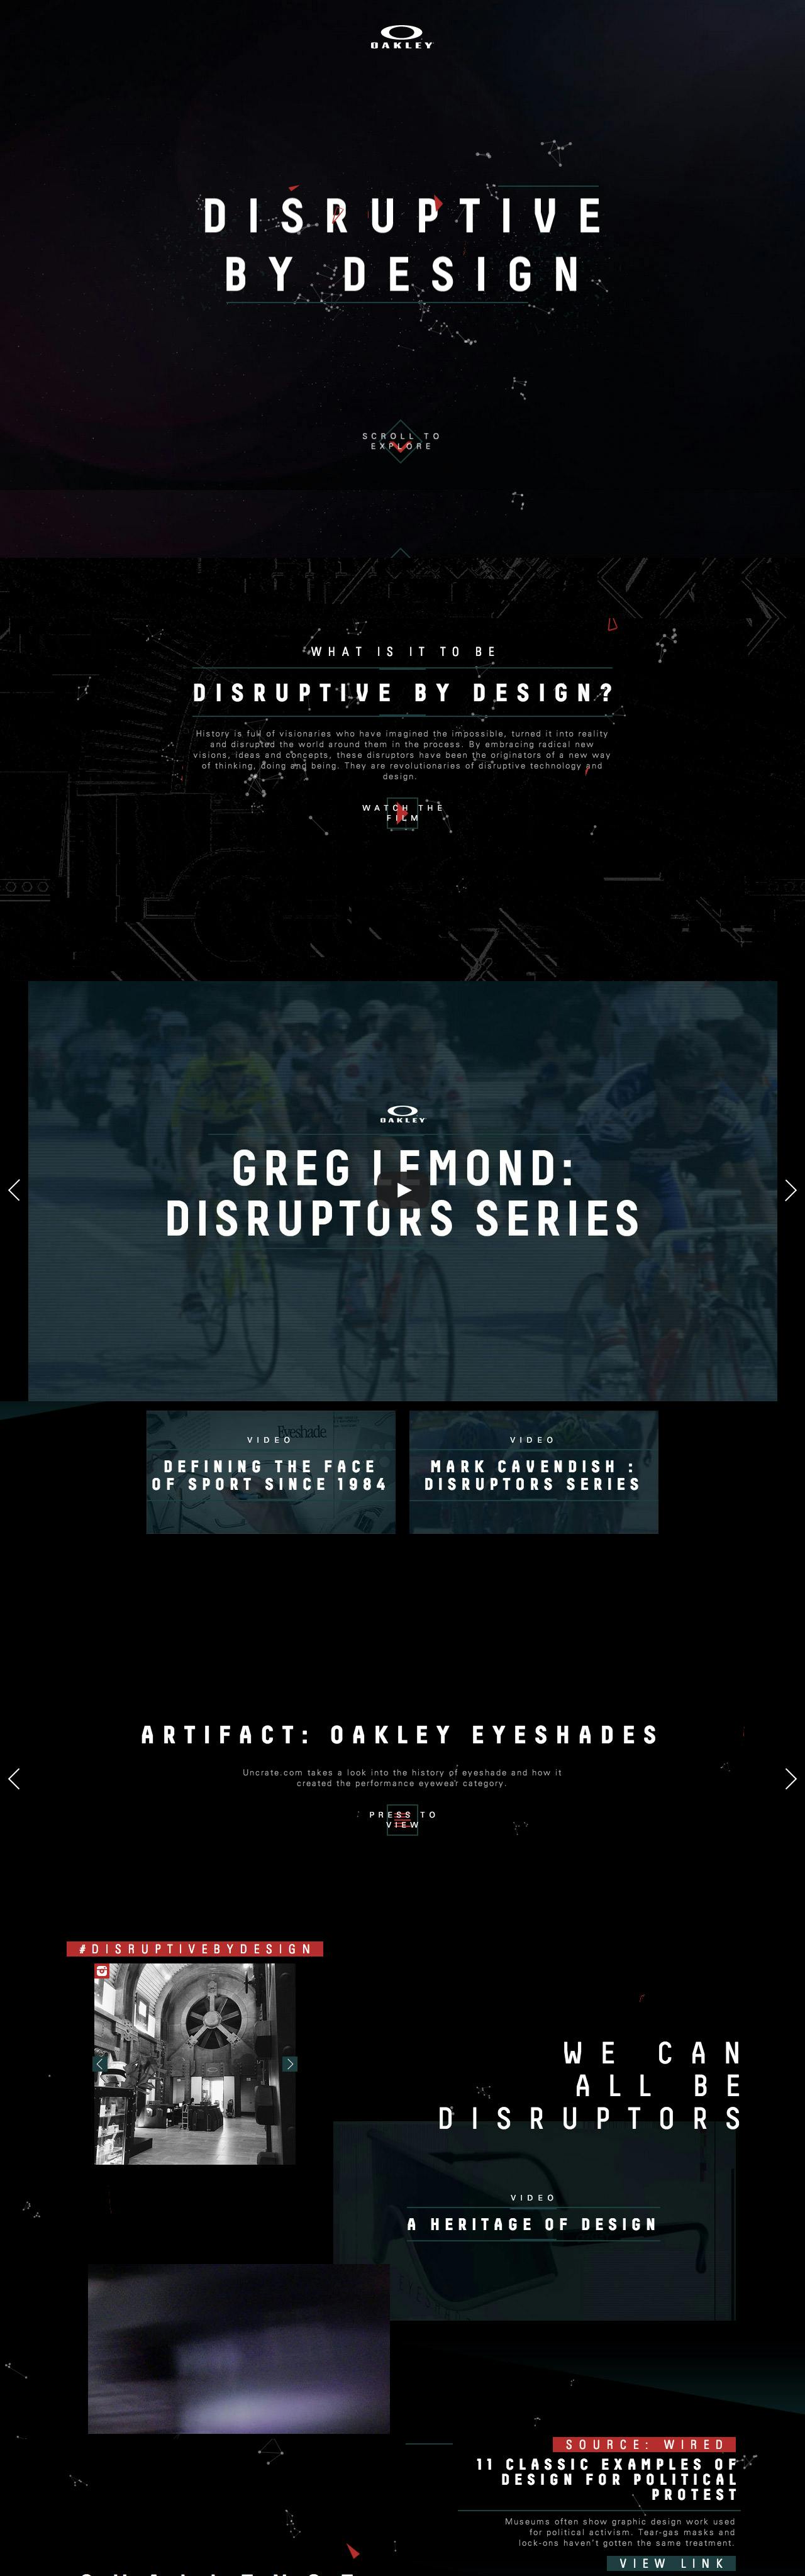 Disruptive By Design Website Screenshot